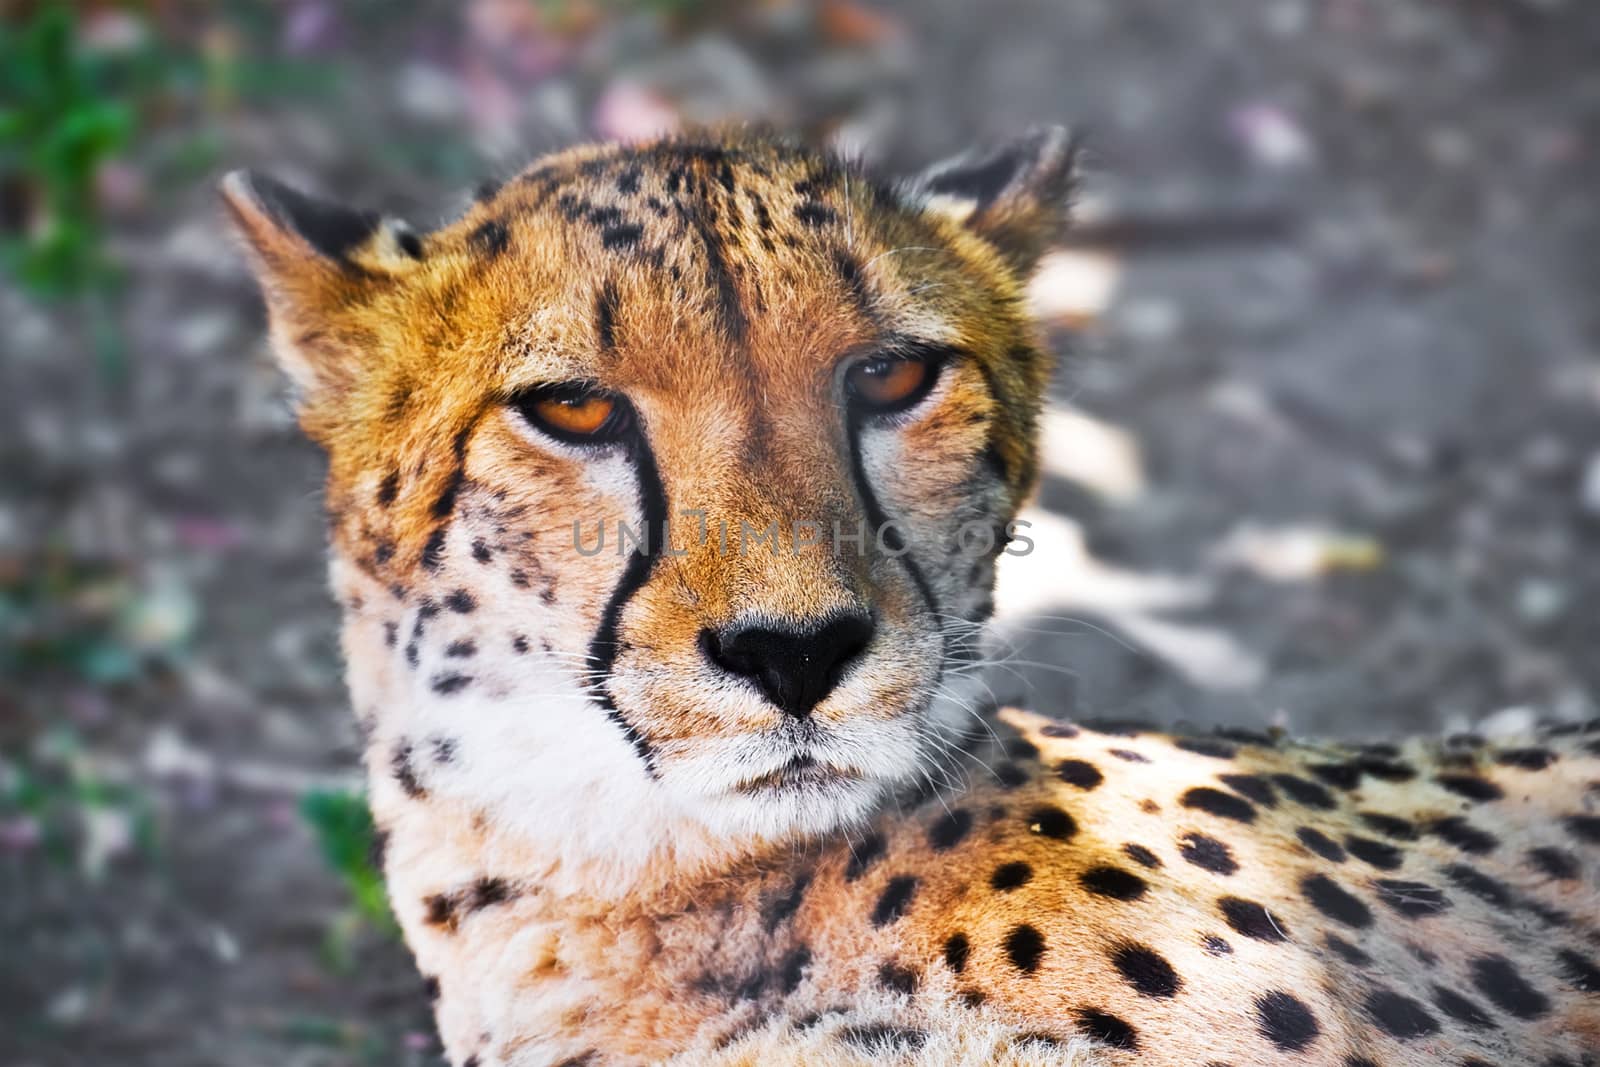 Beautiful close-up portrait of young graceful Cheetah